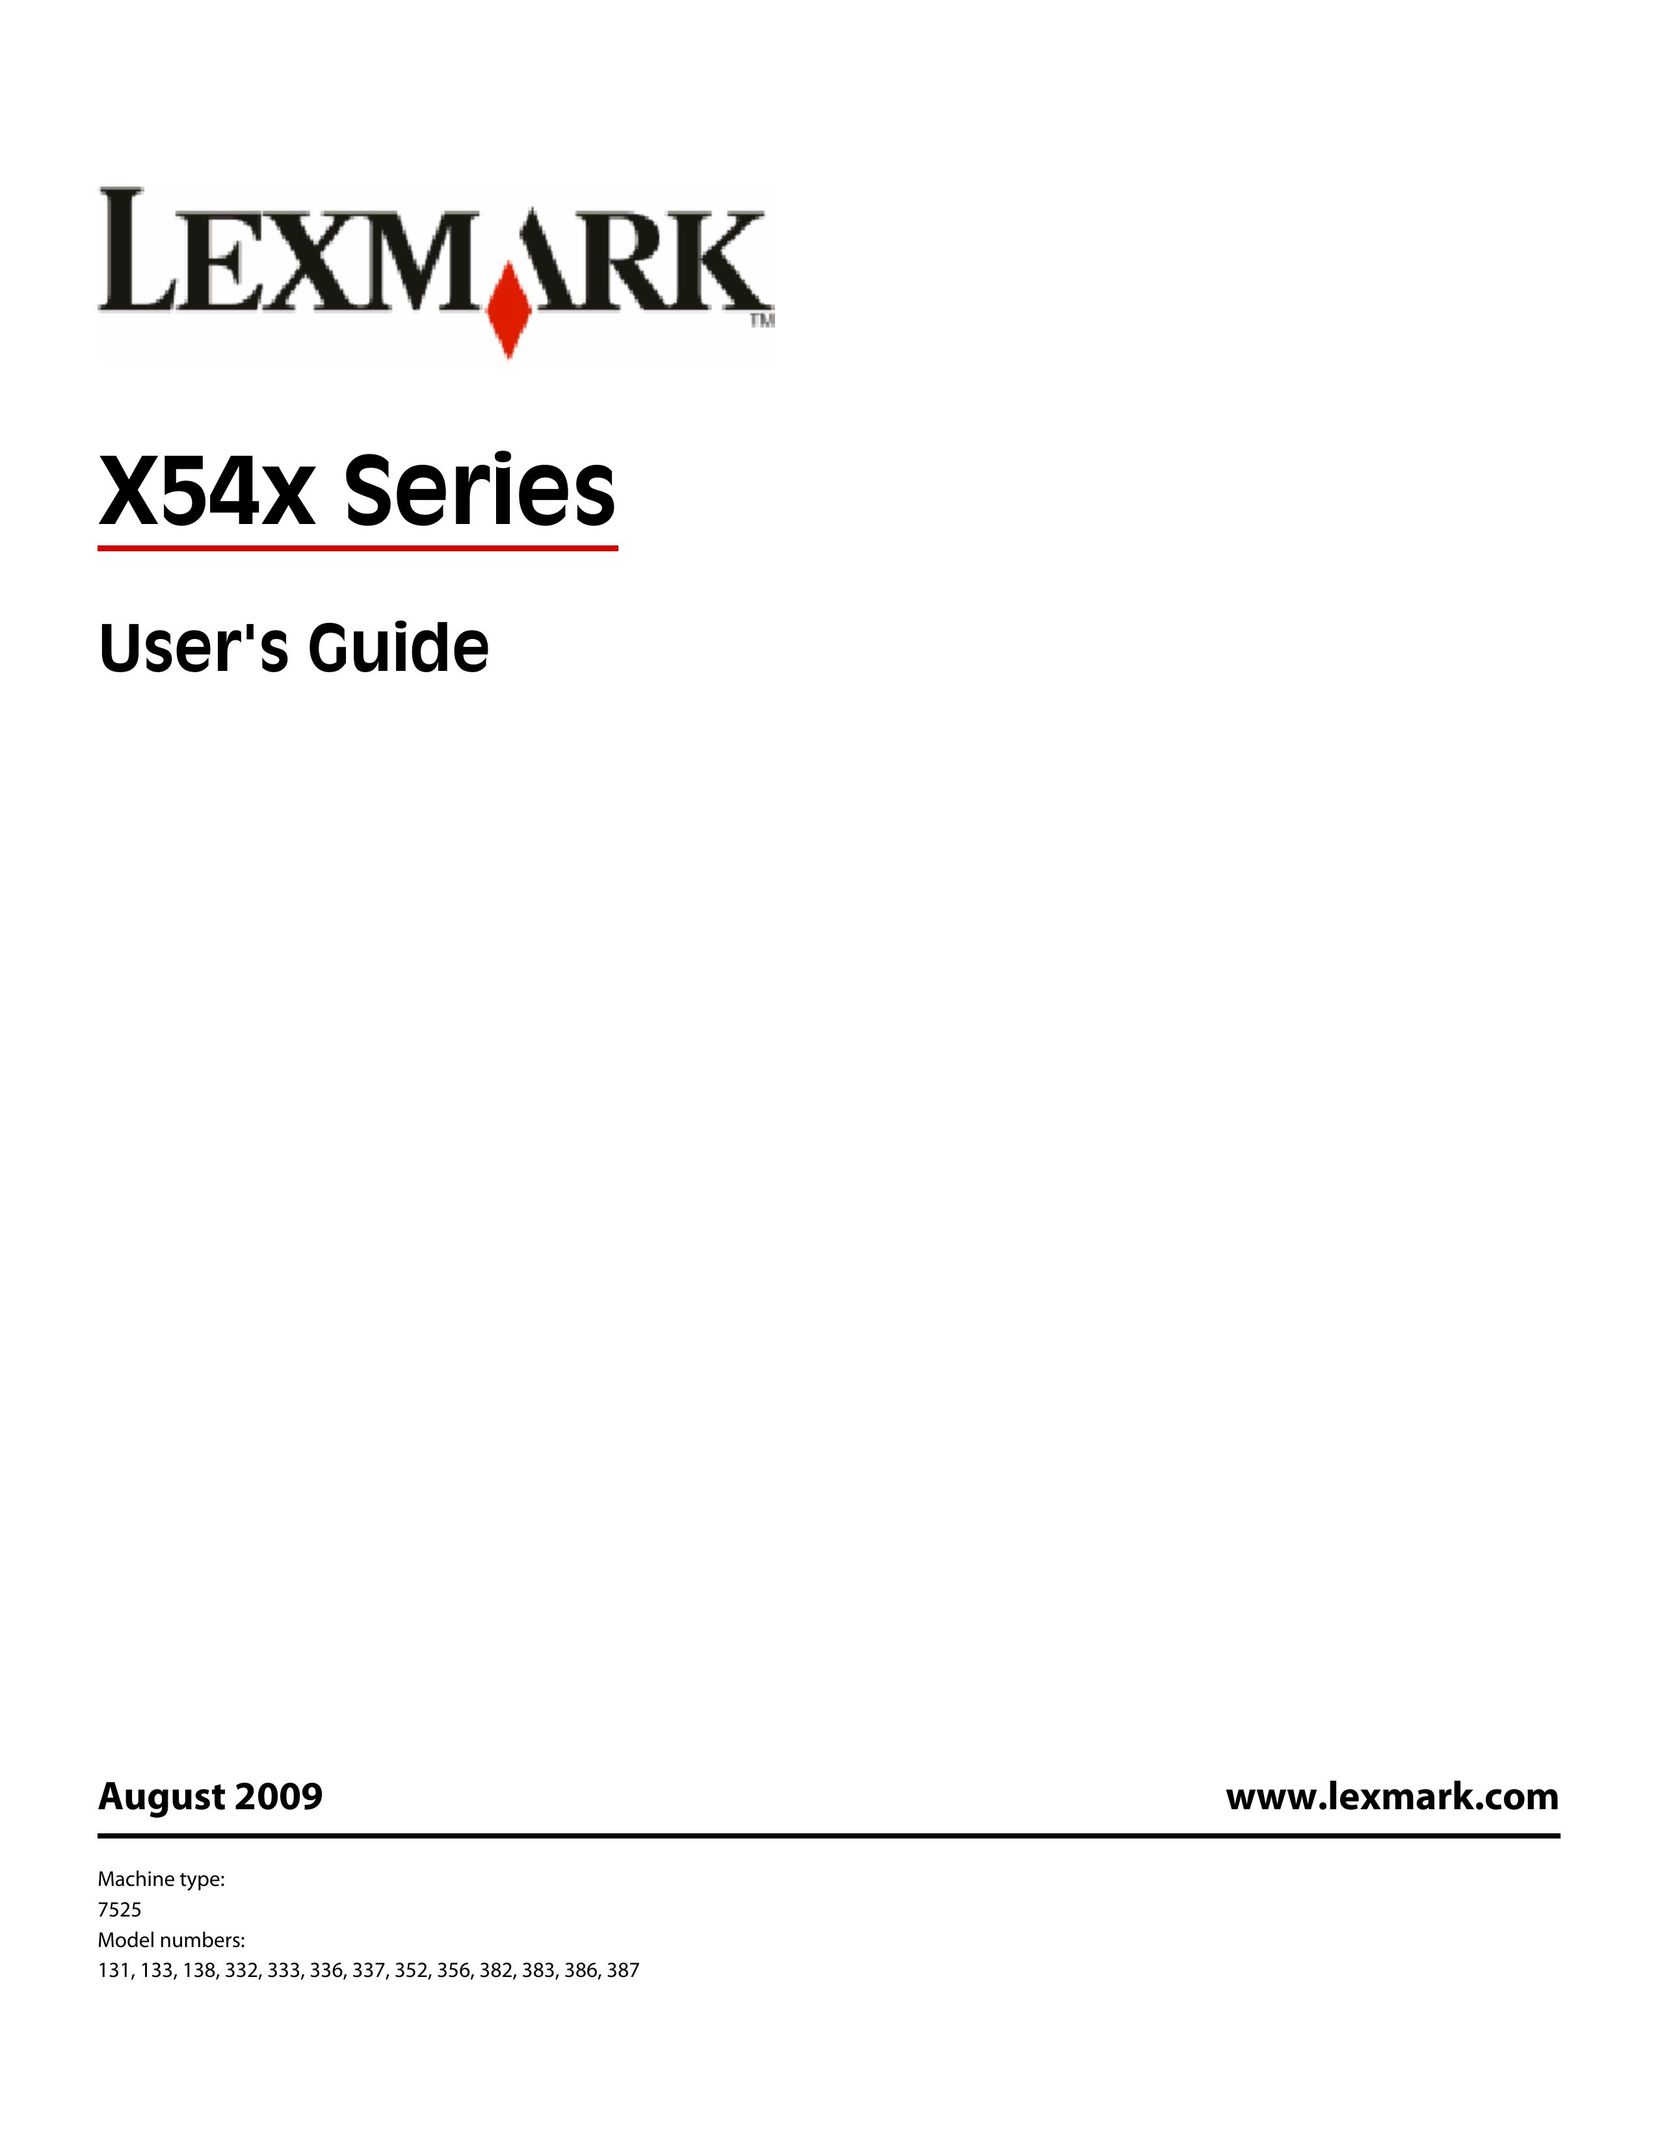 Lexmark 133 All in One Printer User Manual